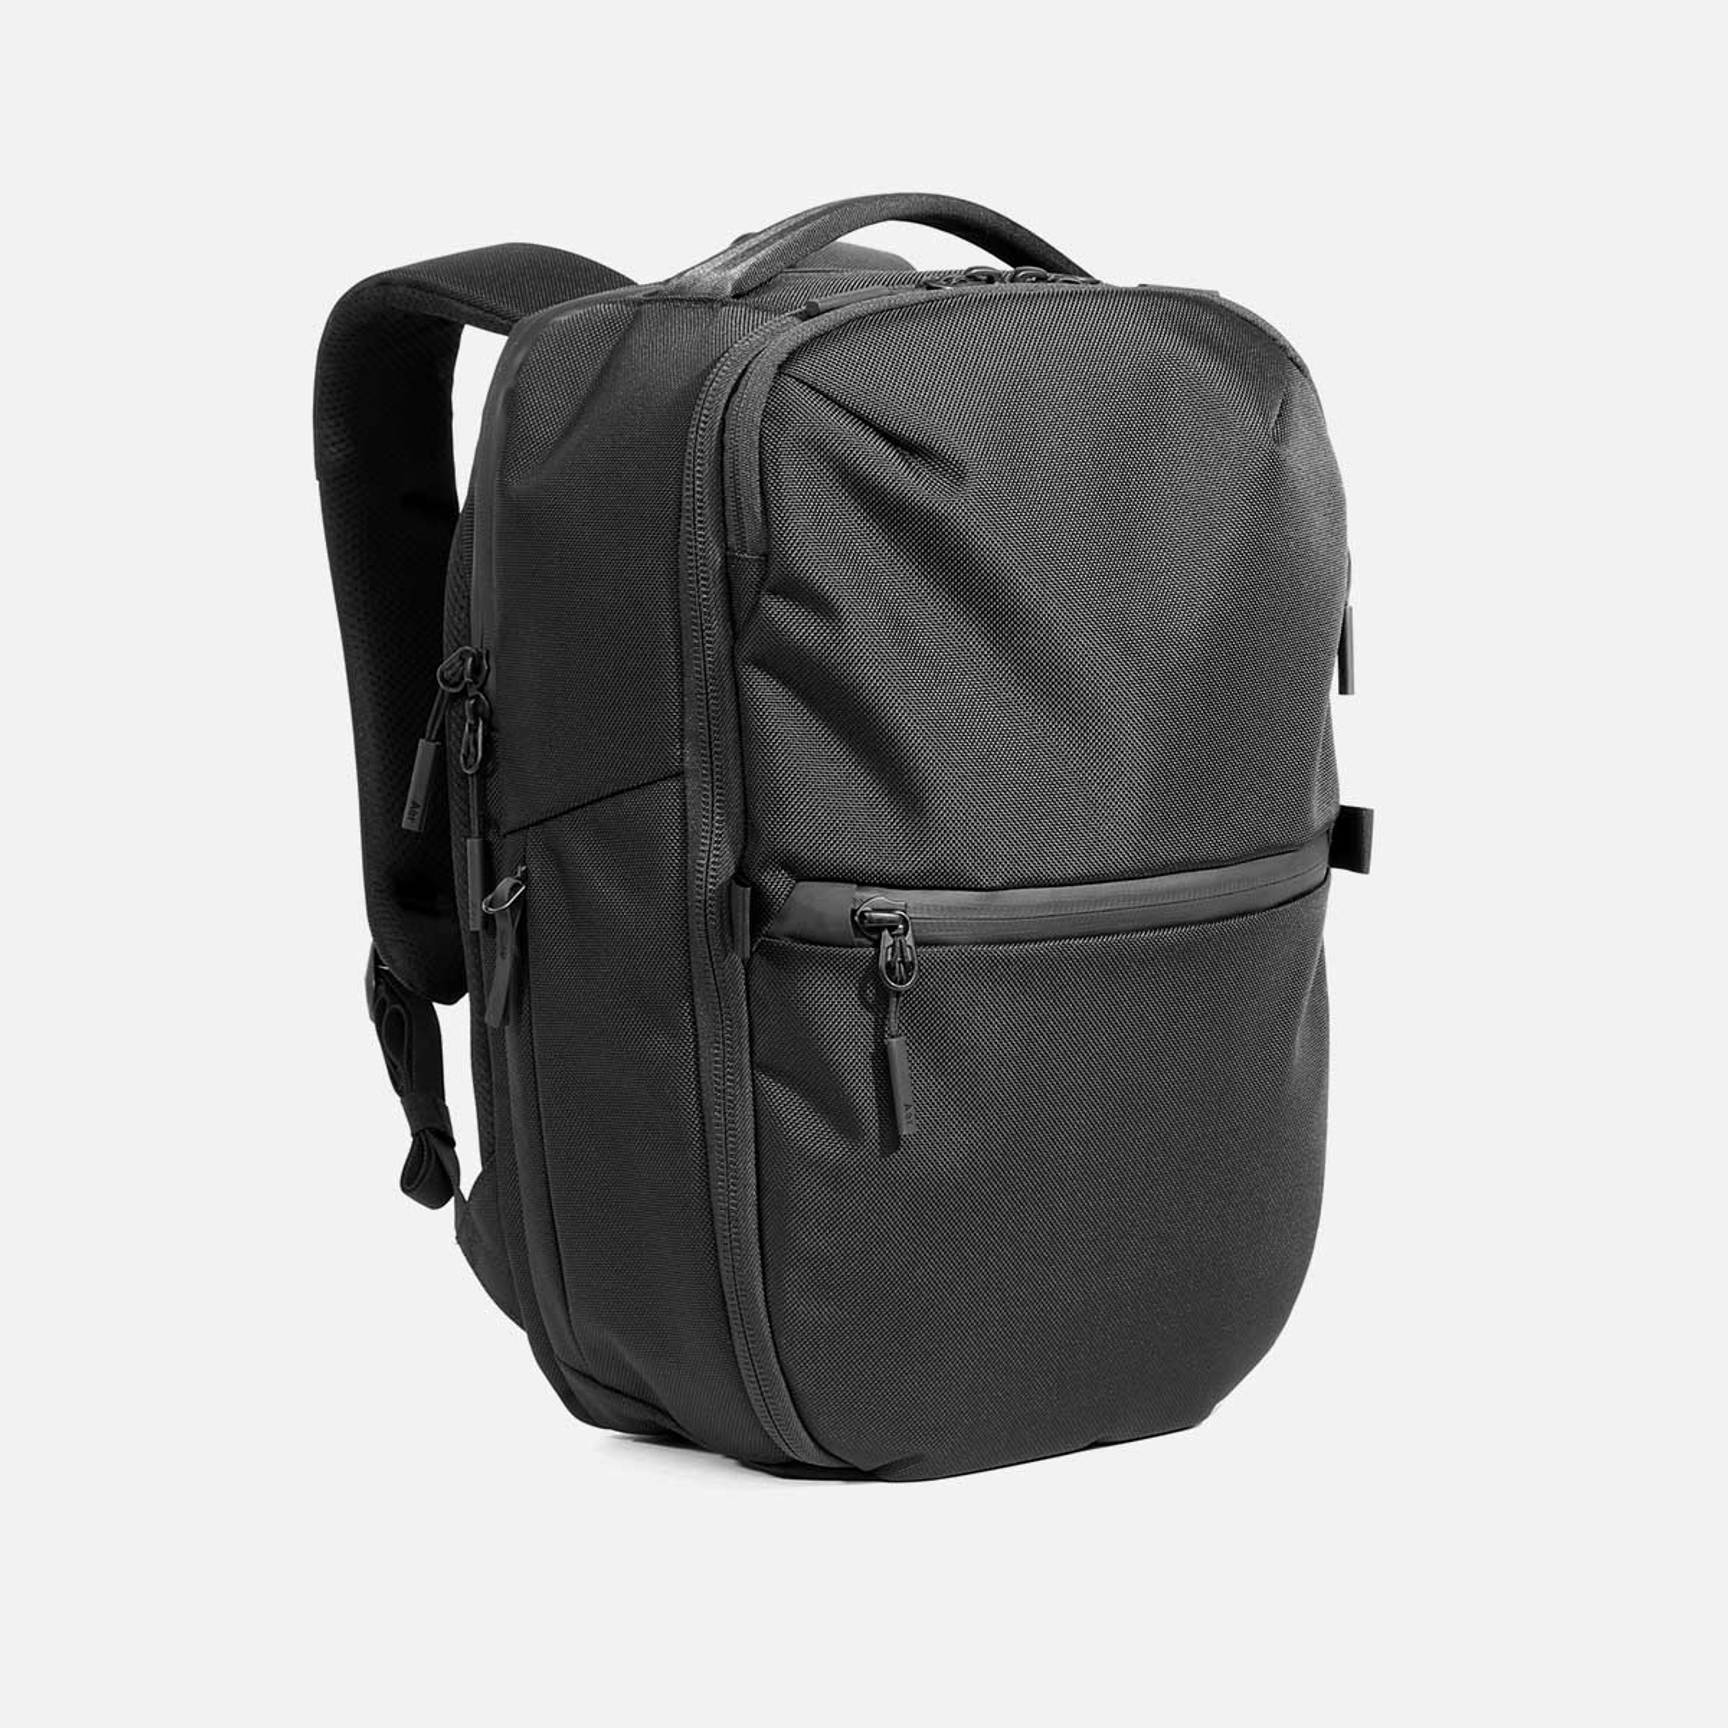 SYCNB Aesthetic School Backpack Waterproof Black Bookbag College High School Bags for Boys Girls Lightweight Travel Casual Daypack Laptop Backpacks